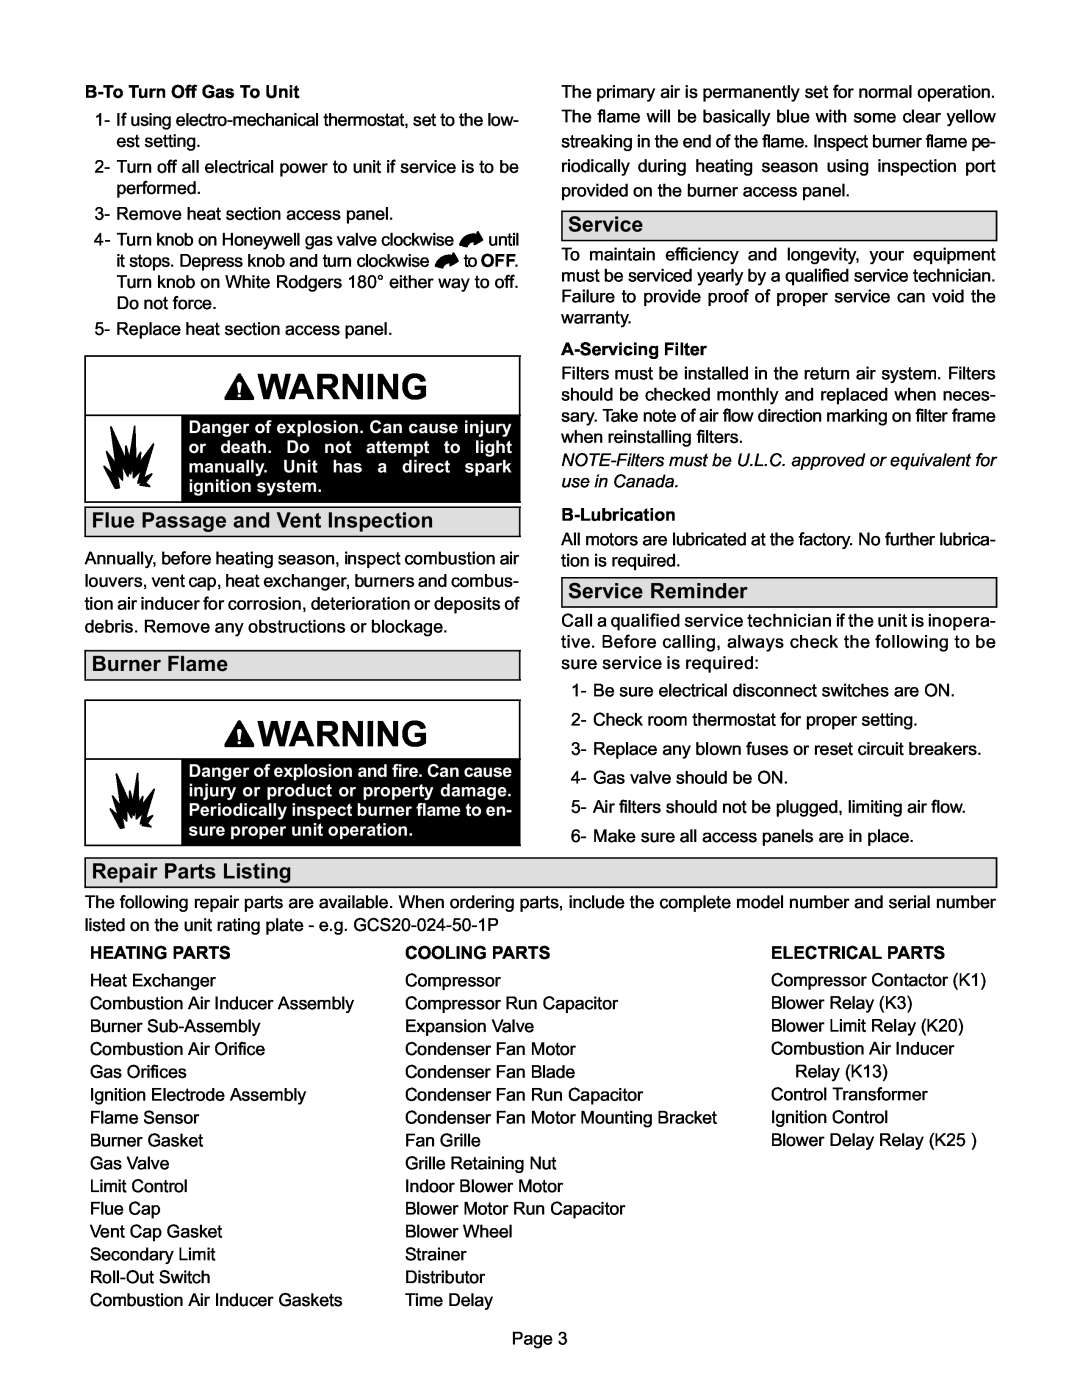 Lennox International Inc GCS16-024, GCS20R-060 manual Flue Passage and Vent Inspection, Burner Flame, Service Reminder 